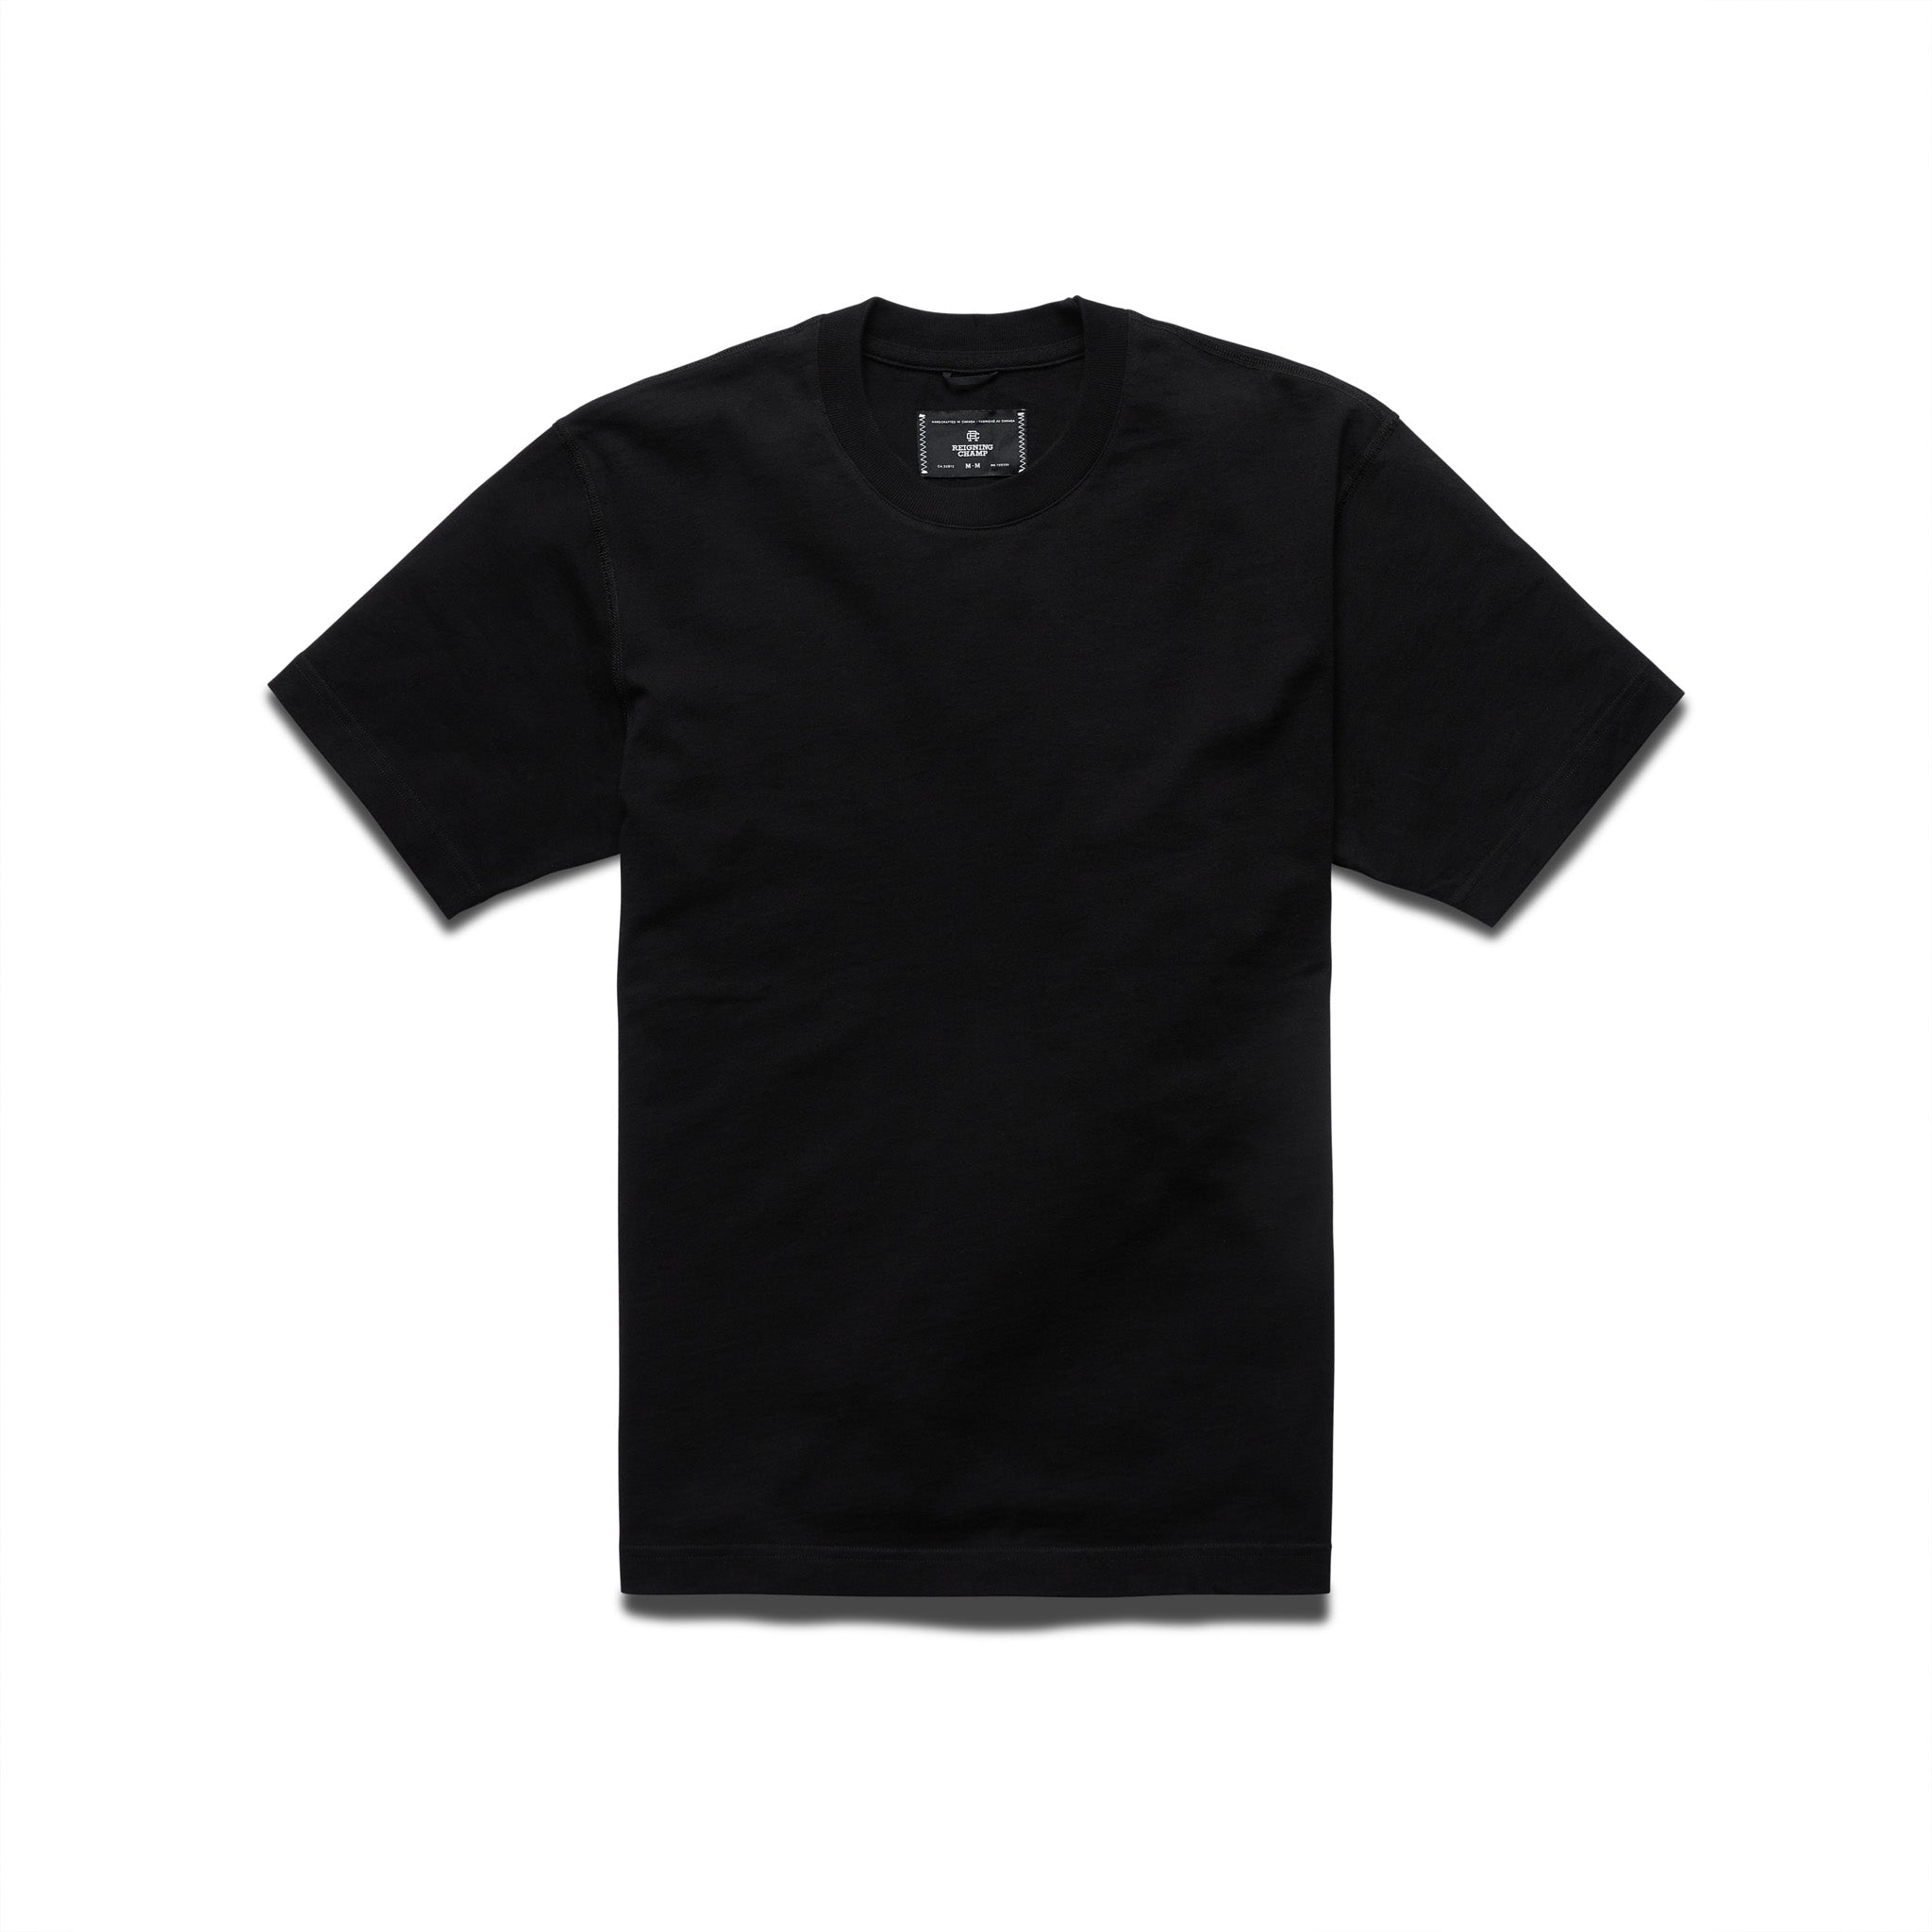 Kyoto Black Classic T-shirt